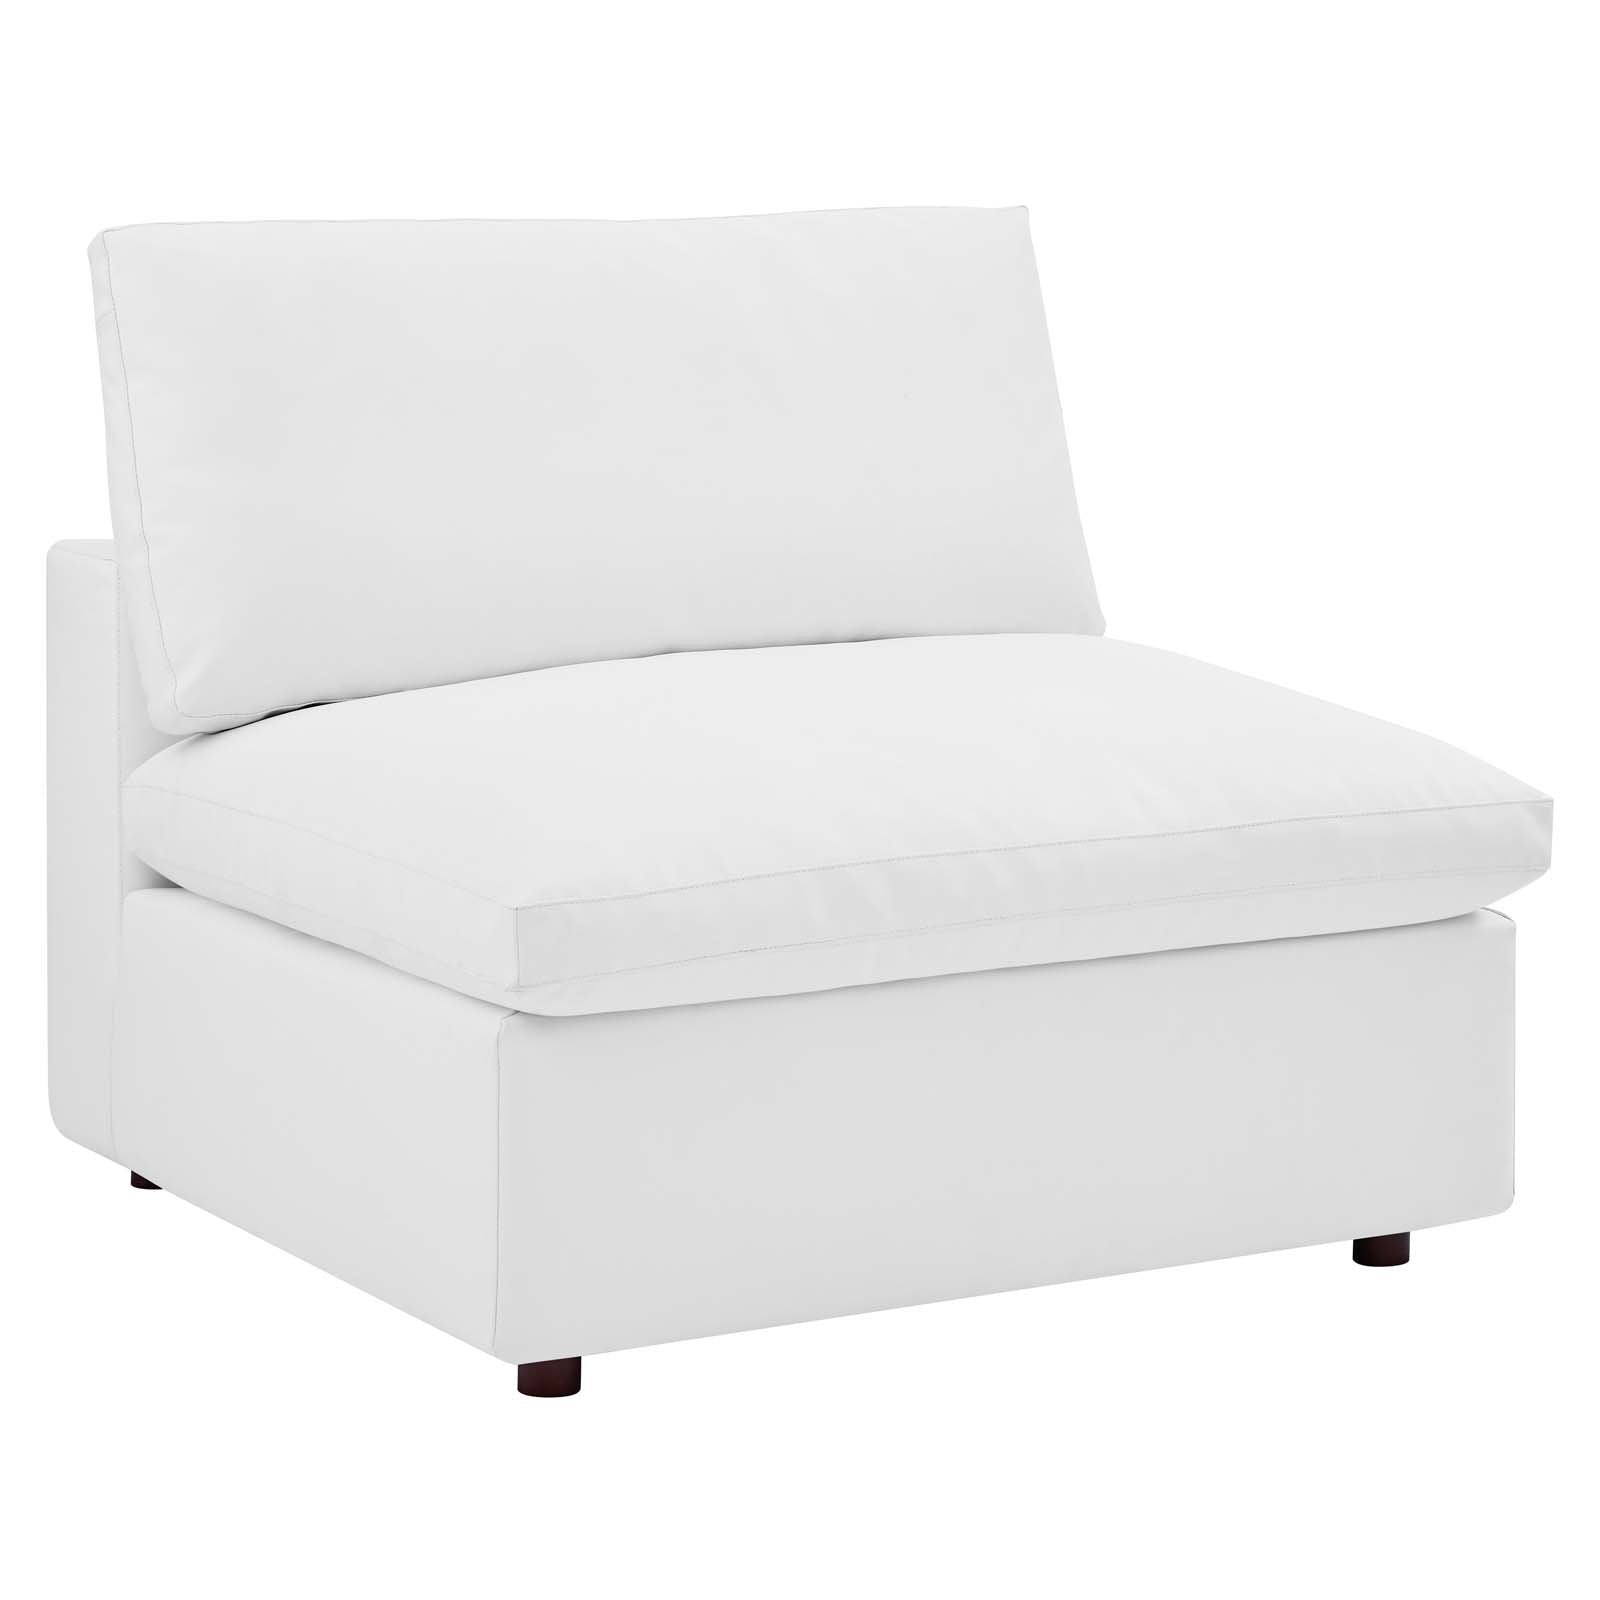 Posh Cloud White/ Gray Deep Seating Extra Soft Comfy Oversized Modular  Sectional Sofa Couc n Ottoman - Sofas, Loveseats & Sectionals - Virginia  Beach, Virginia, Facebook Marketplace